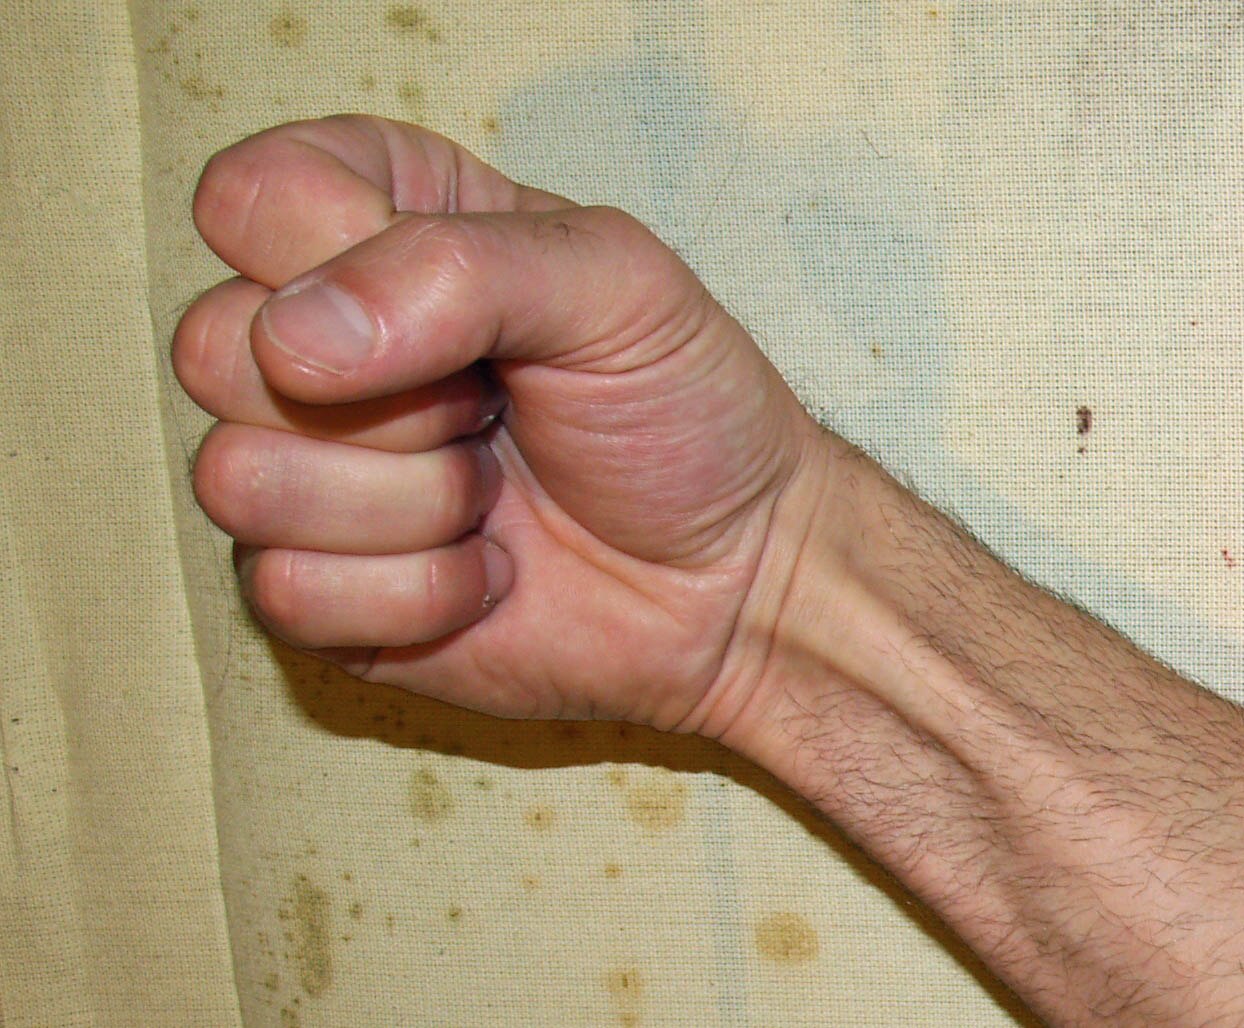 Fist_by_David_Shankbone.jpg